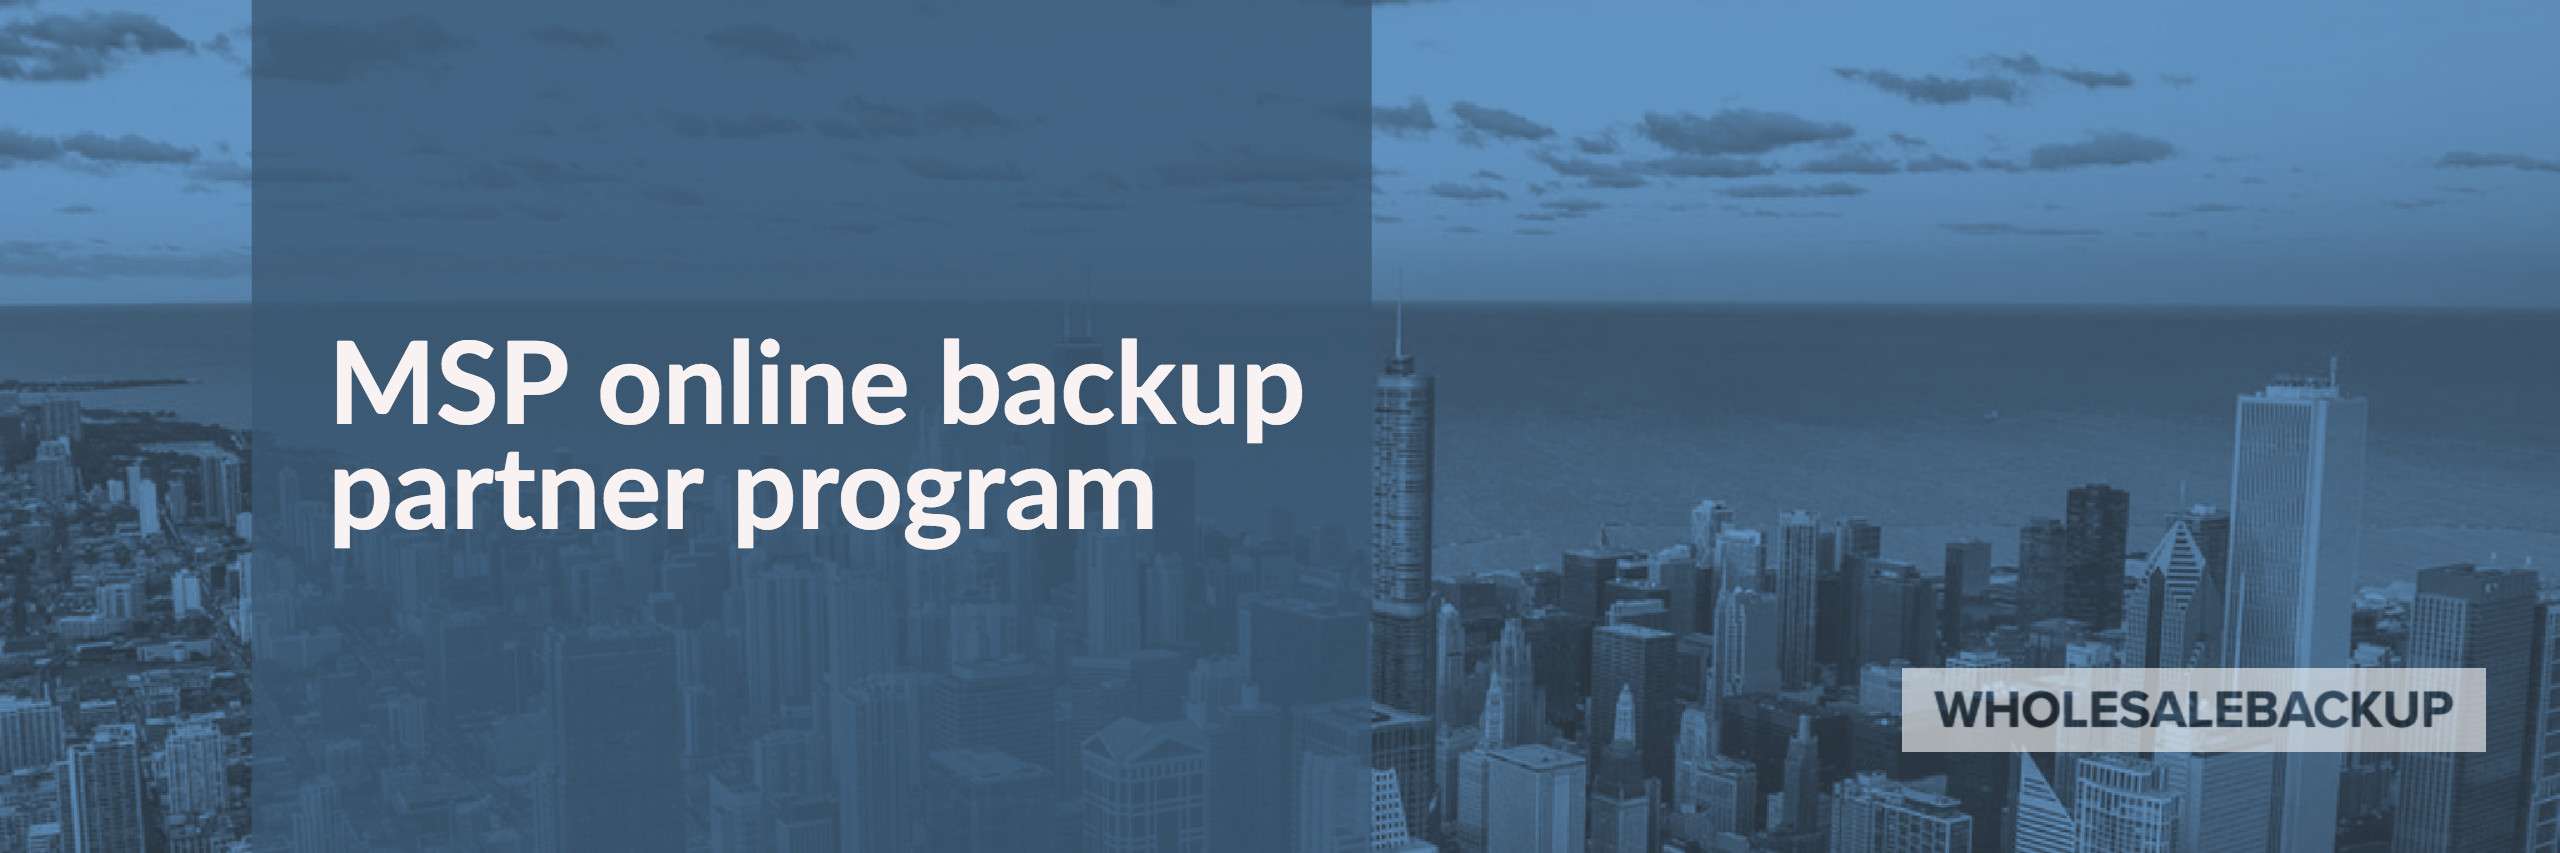 msp online backup partner program